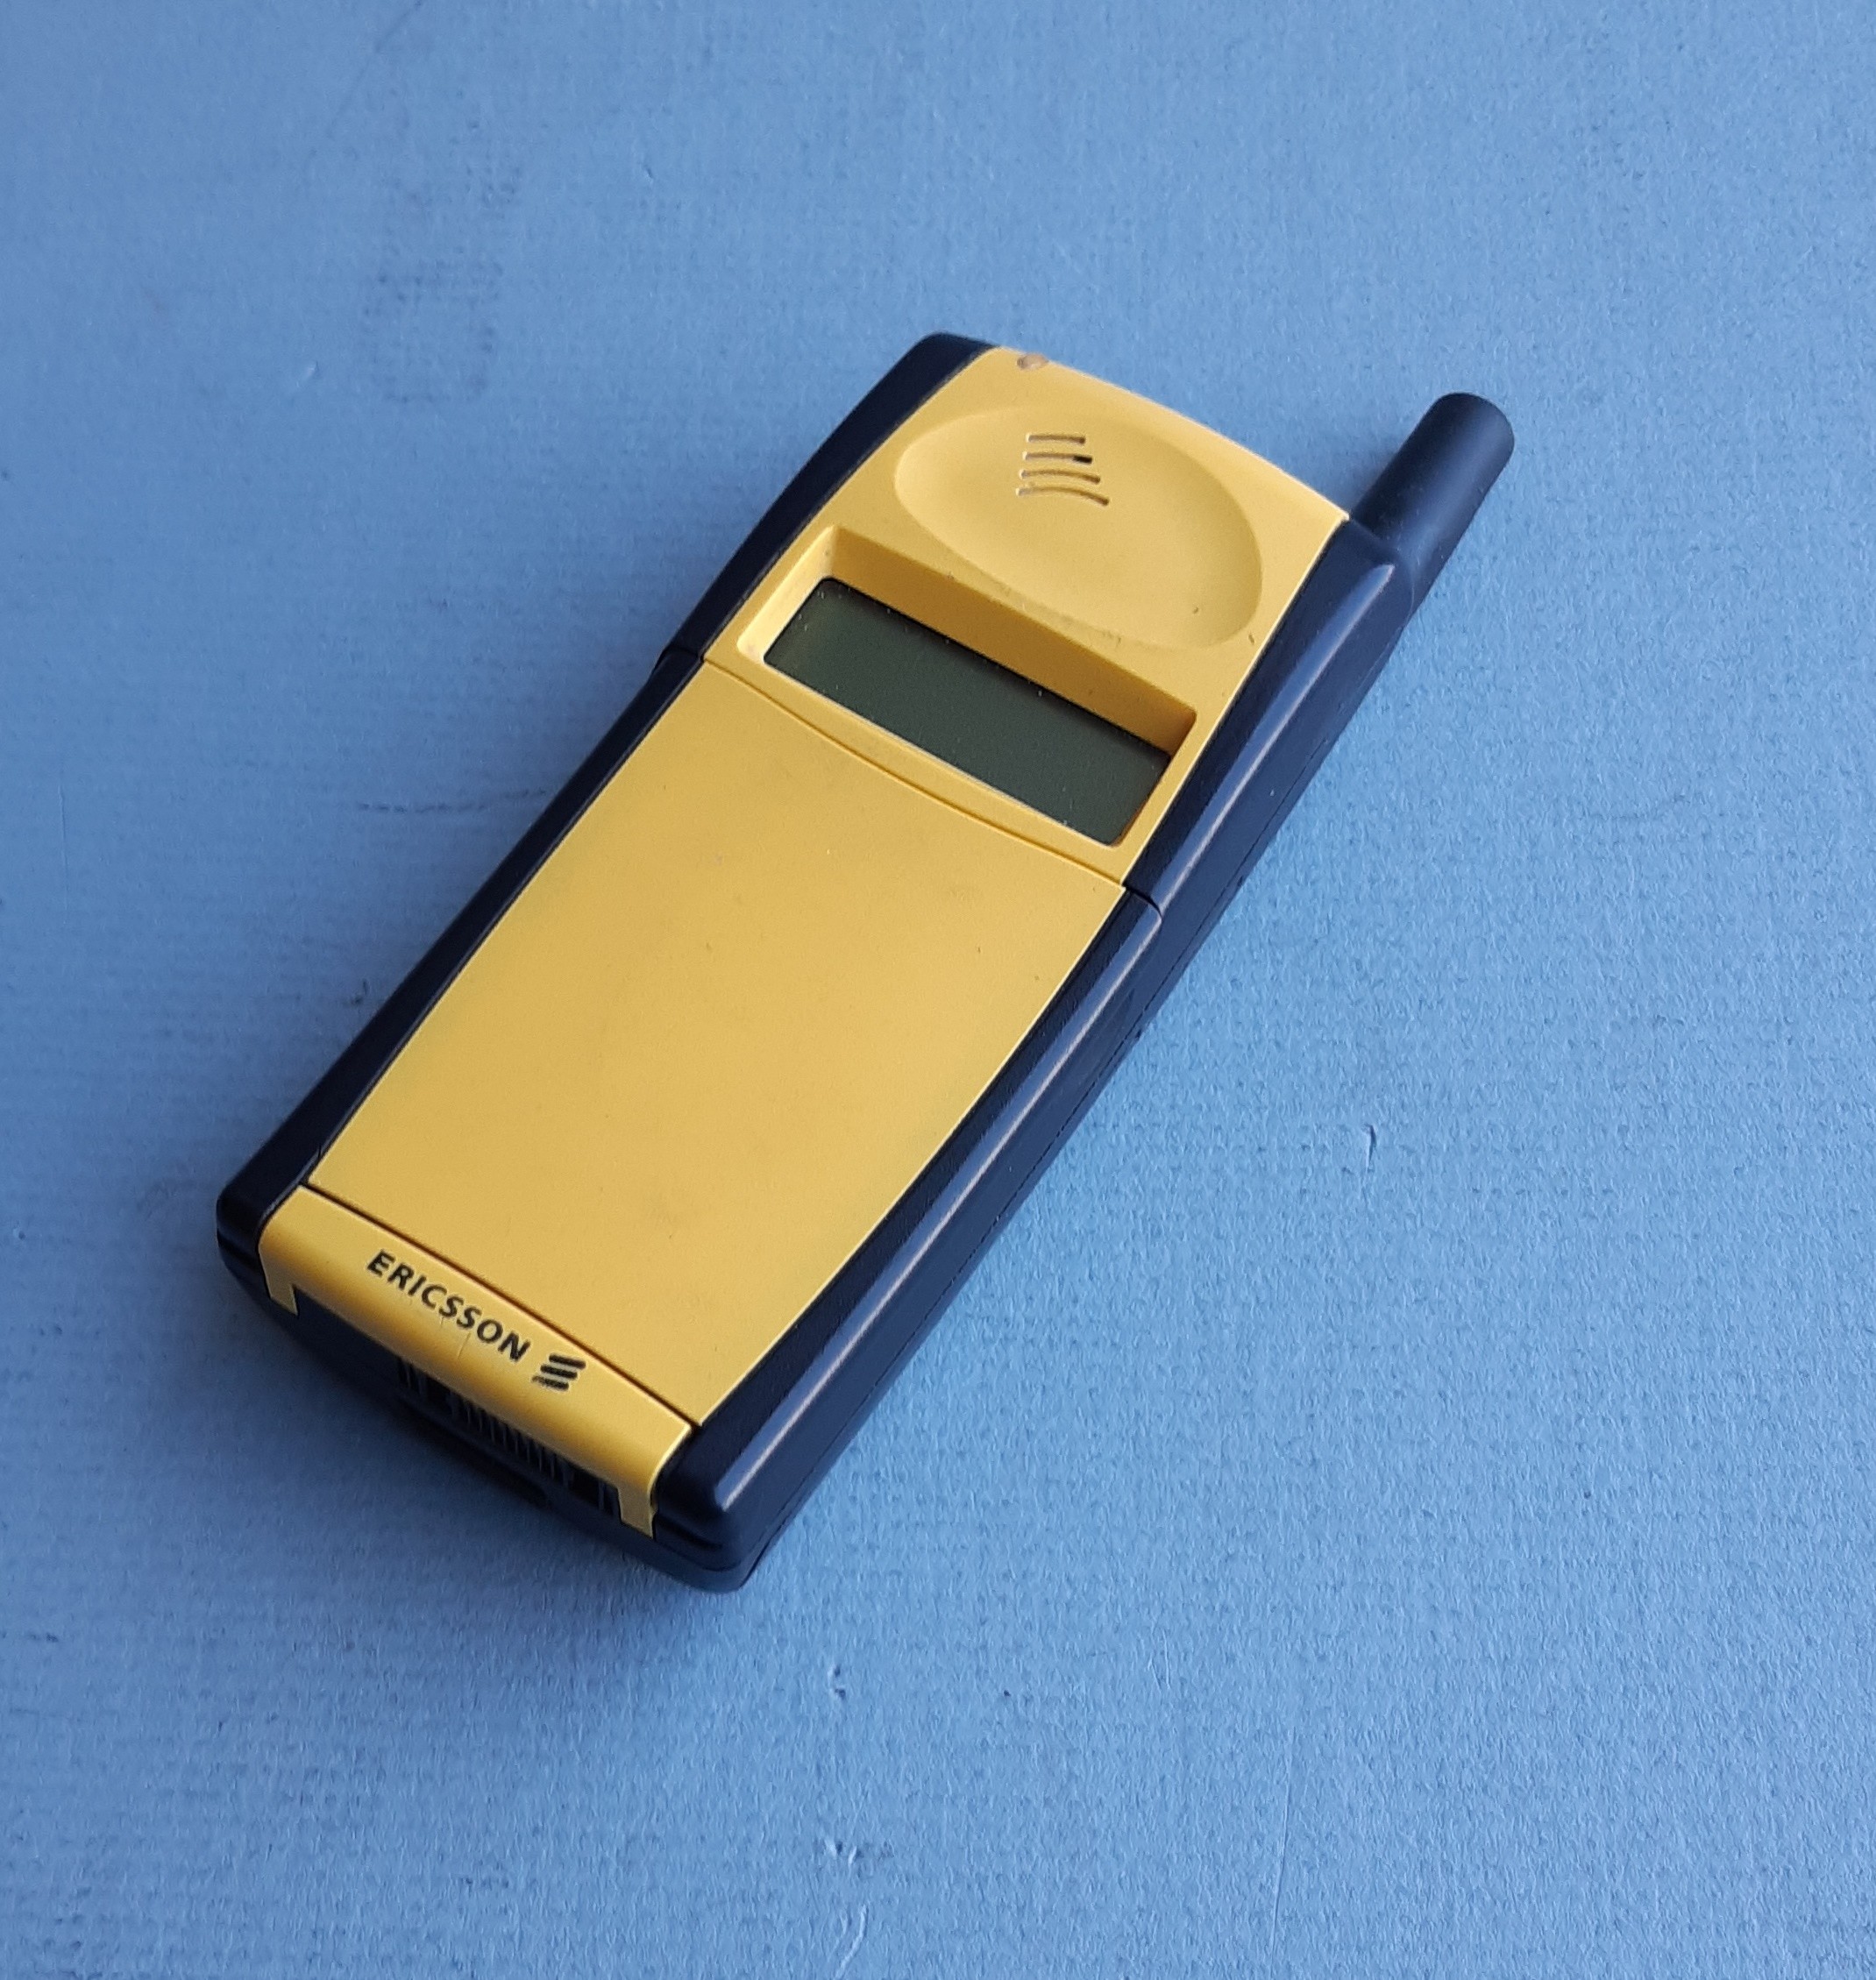 Ericsson GF768 mobiltelefon (Postamúzeum CC BY-NC-SA)